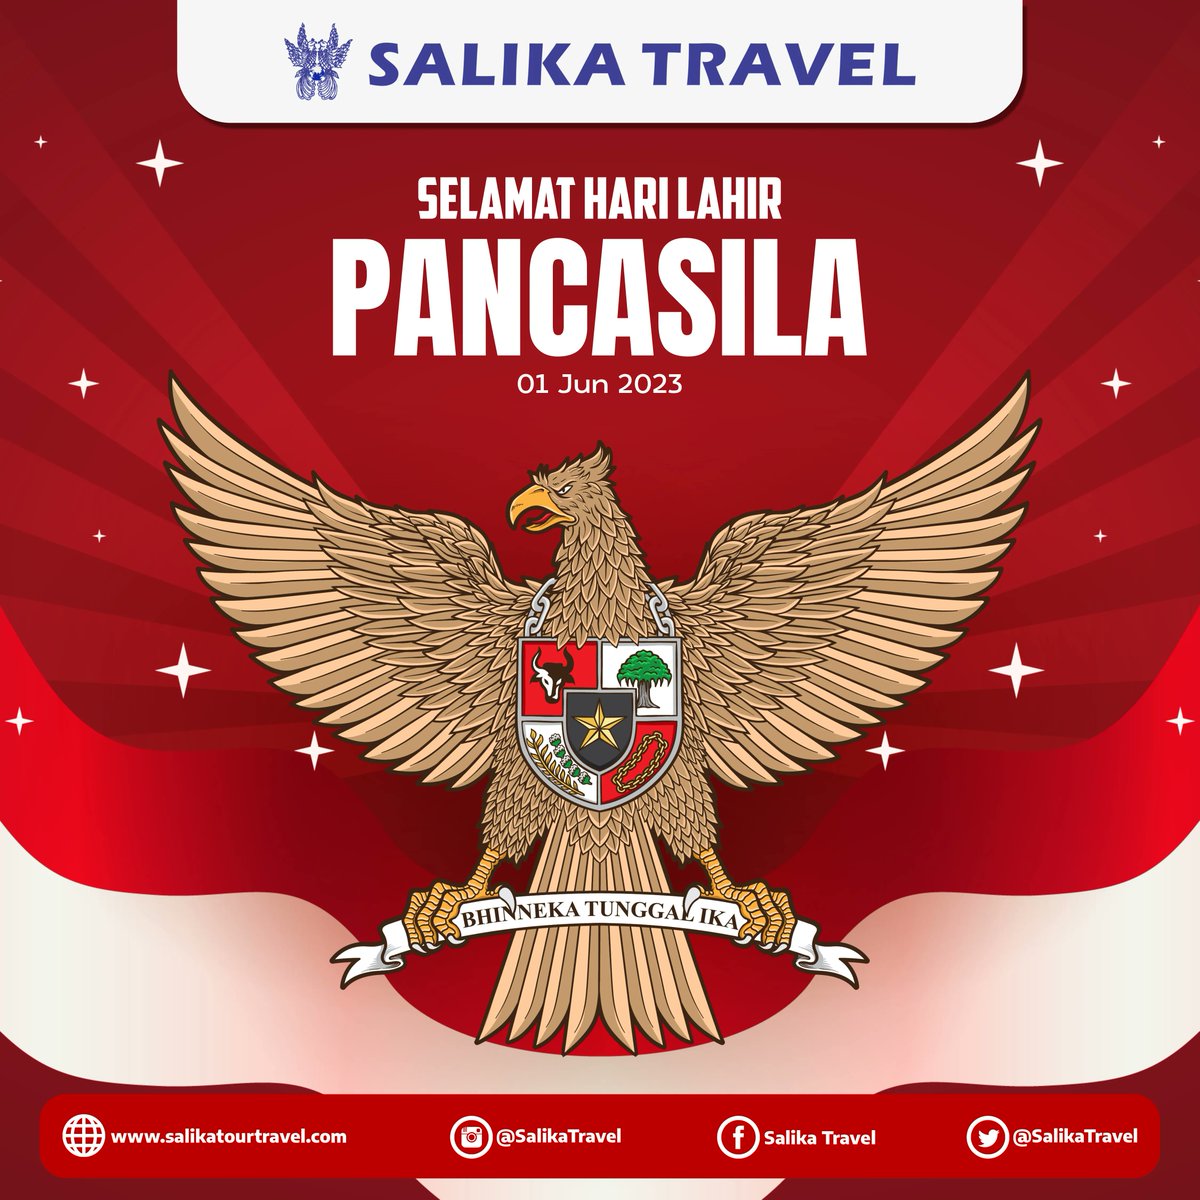 Selamat Hari Lahir Pancasila - 01 Juni 2023

#SalikaTravel
#HariLahirPancasila